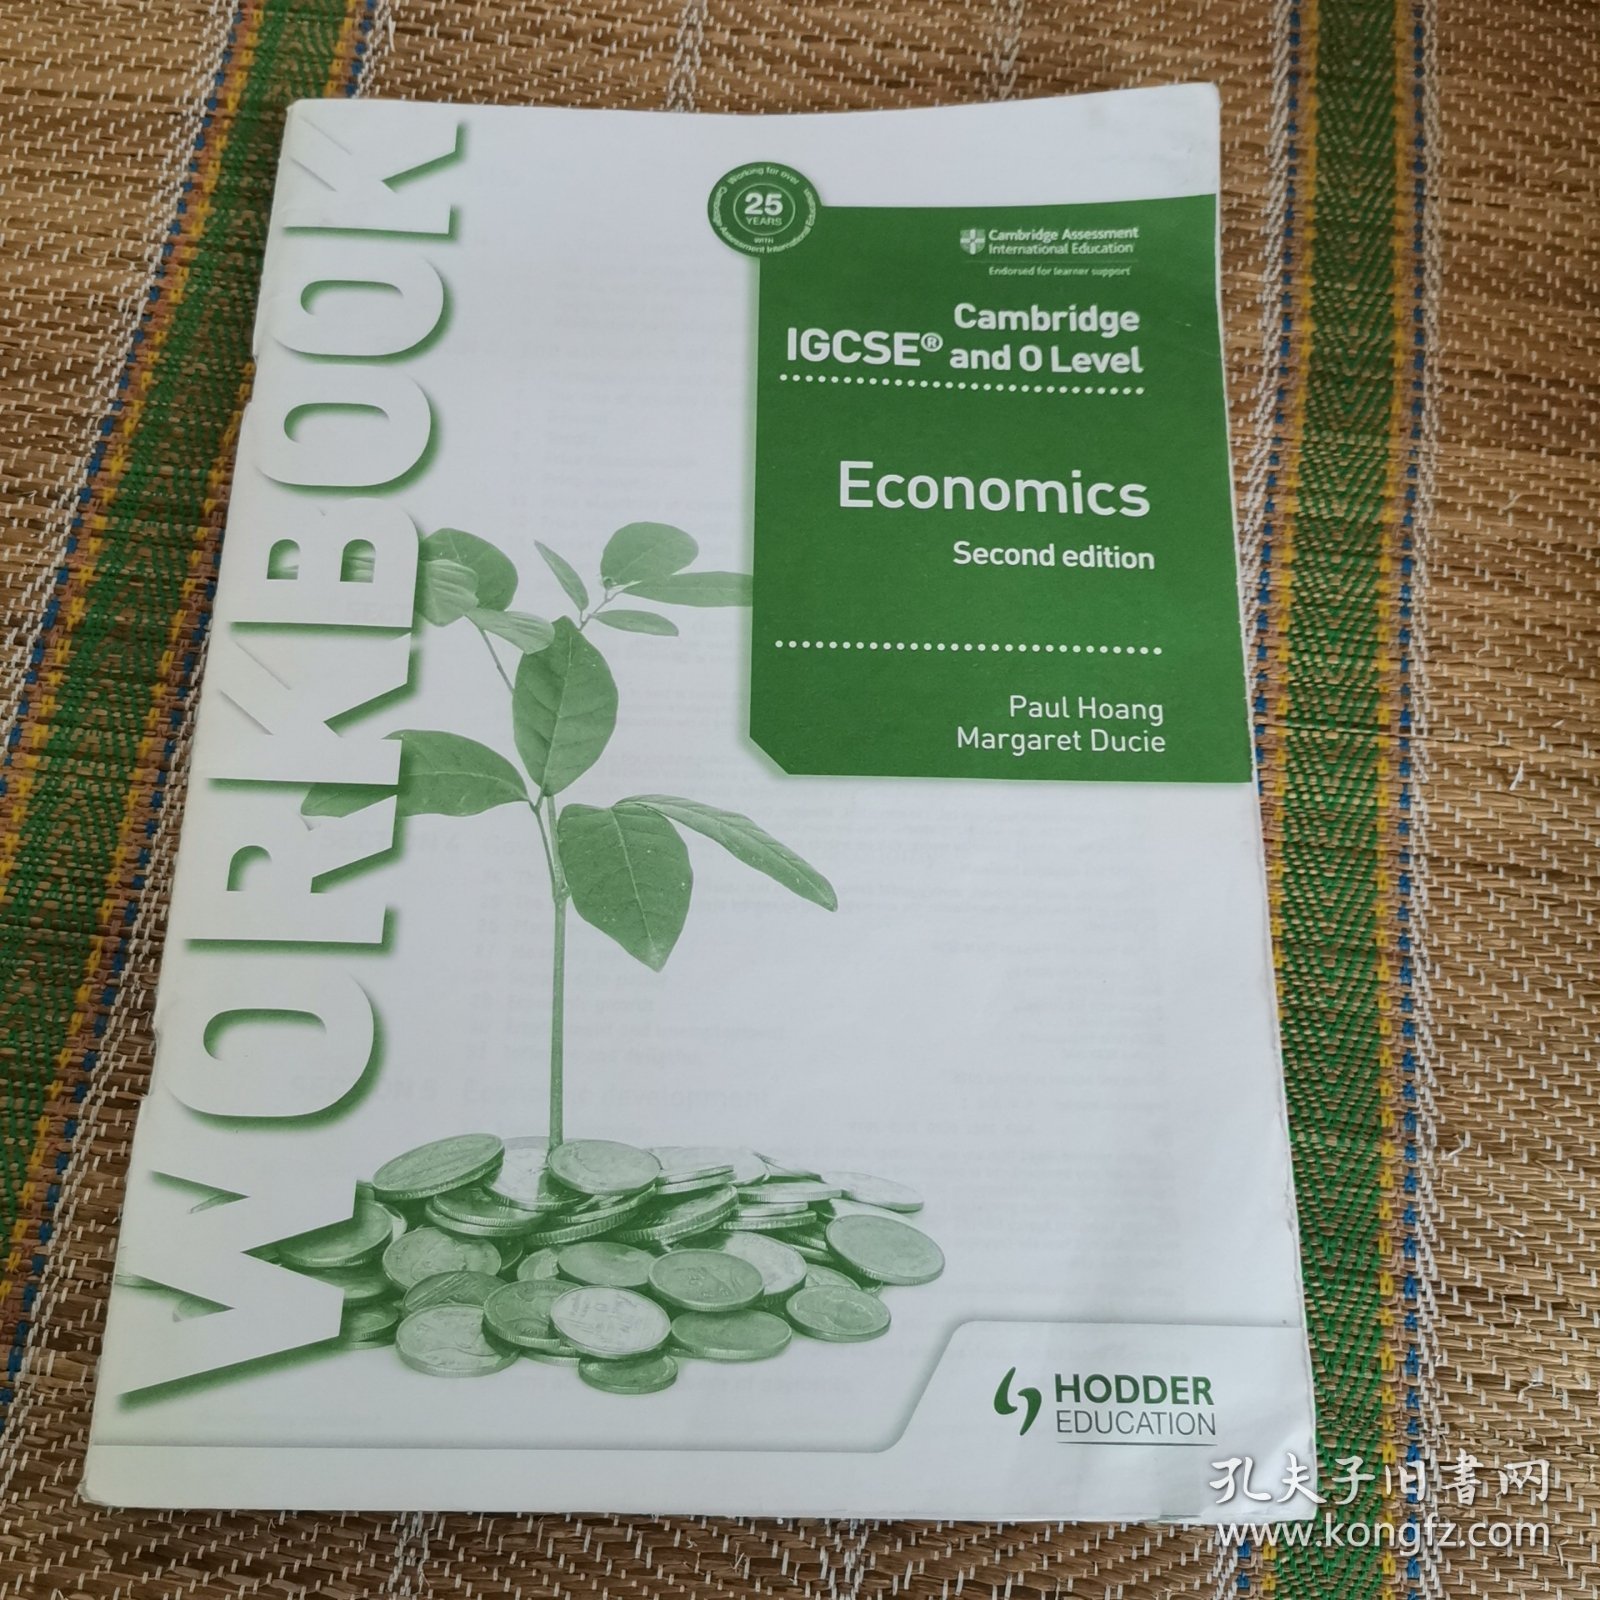 Cambridge IGCSE® and O Level Economics Second edition